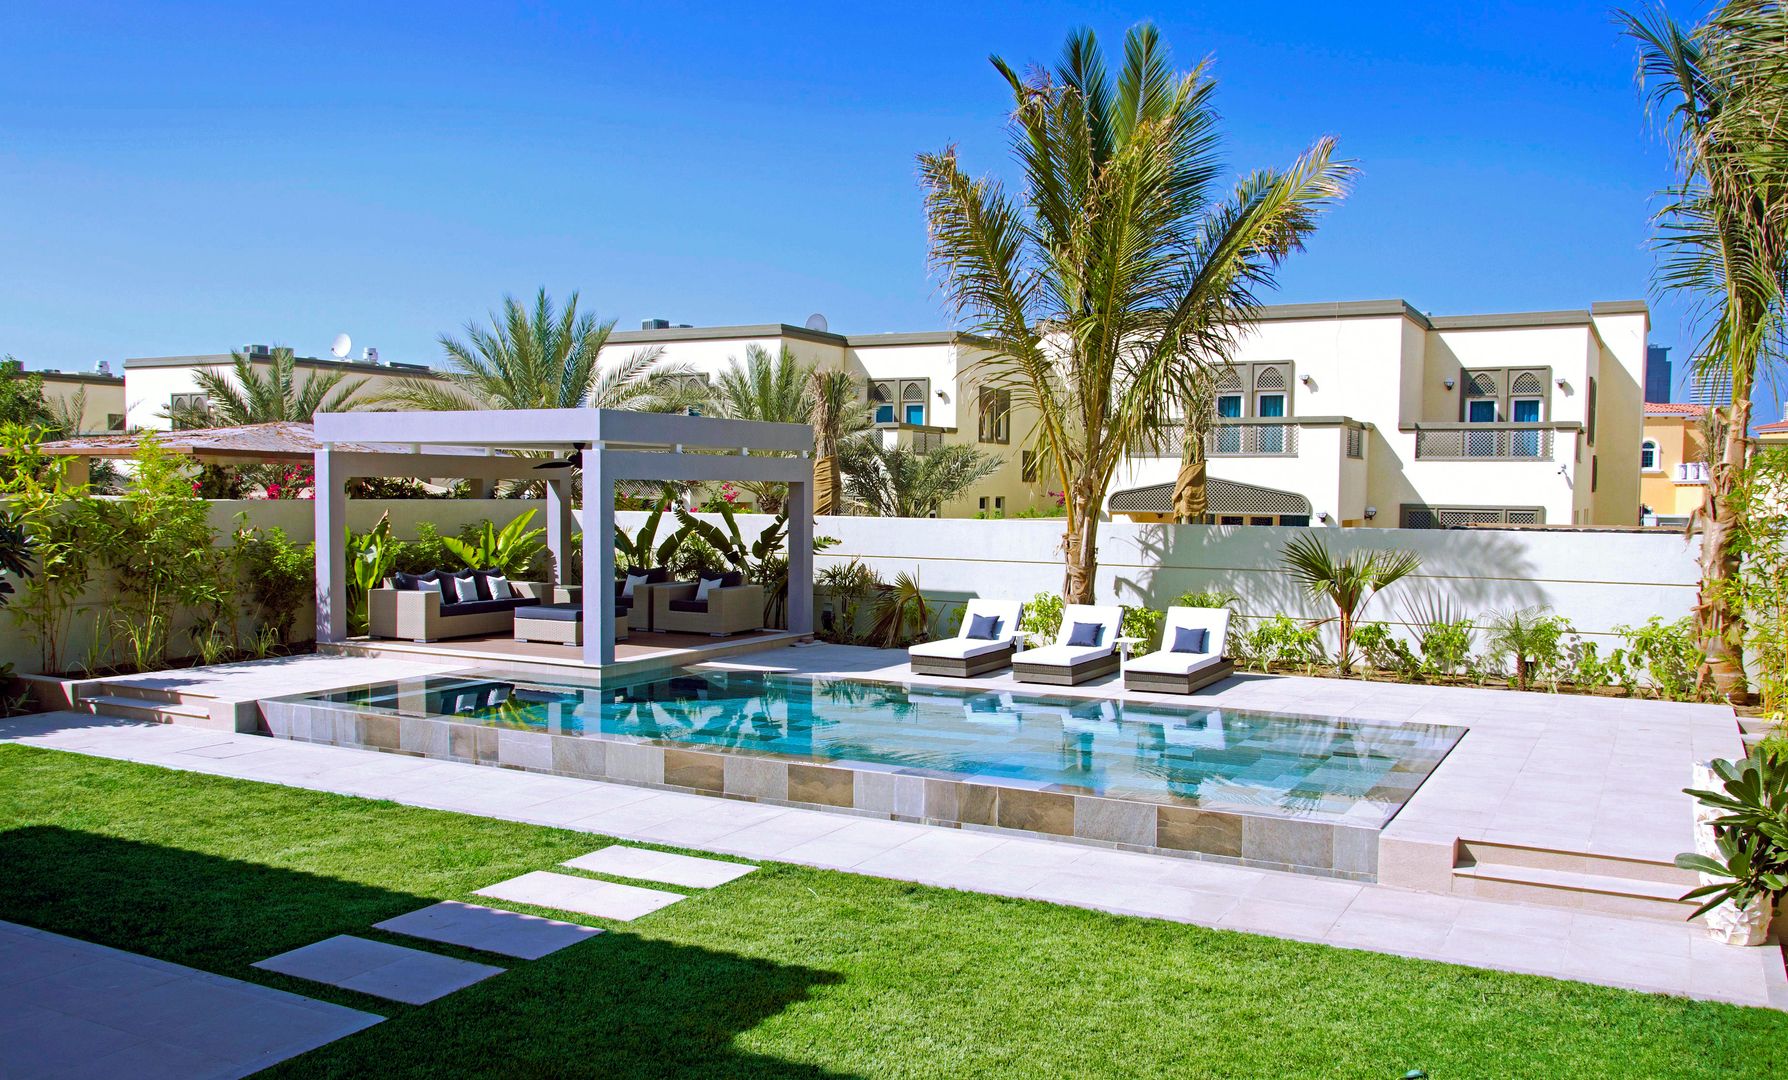 Infinity pool in Italian porcelain tiles Xterior Landscaping and Pools Бассейн в стиле модерн swimming pool Dubai,landscape,design